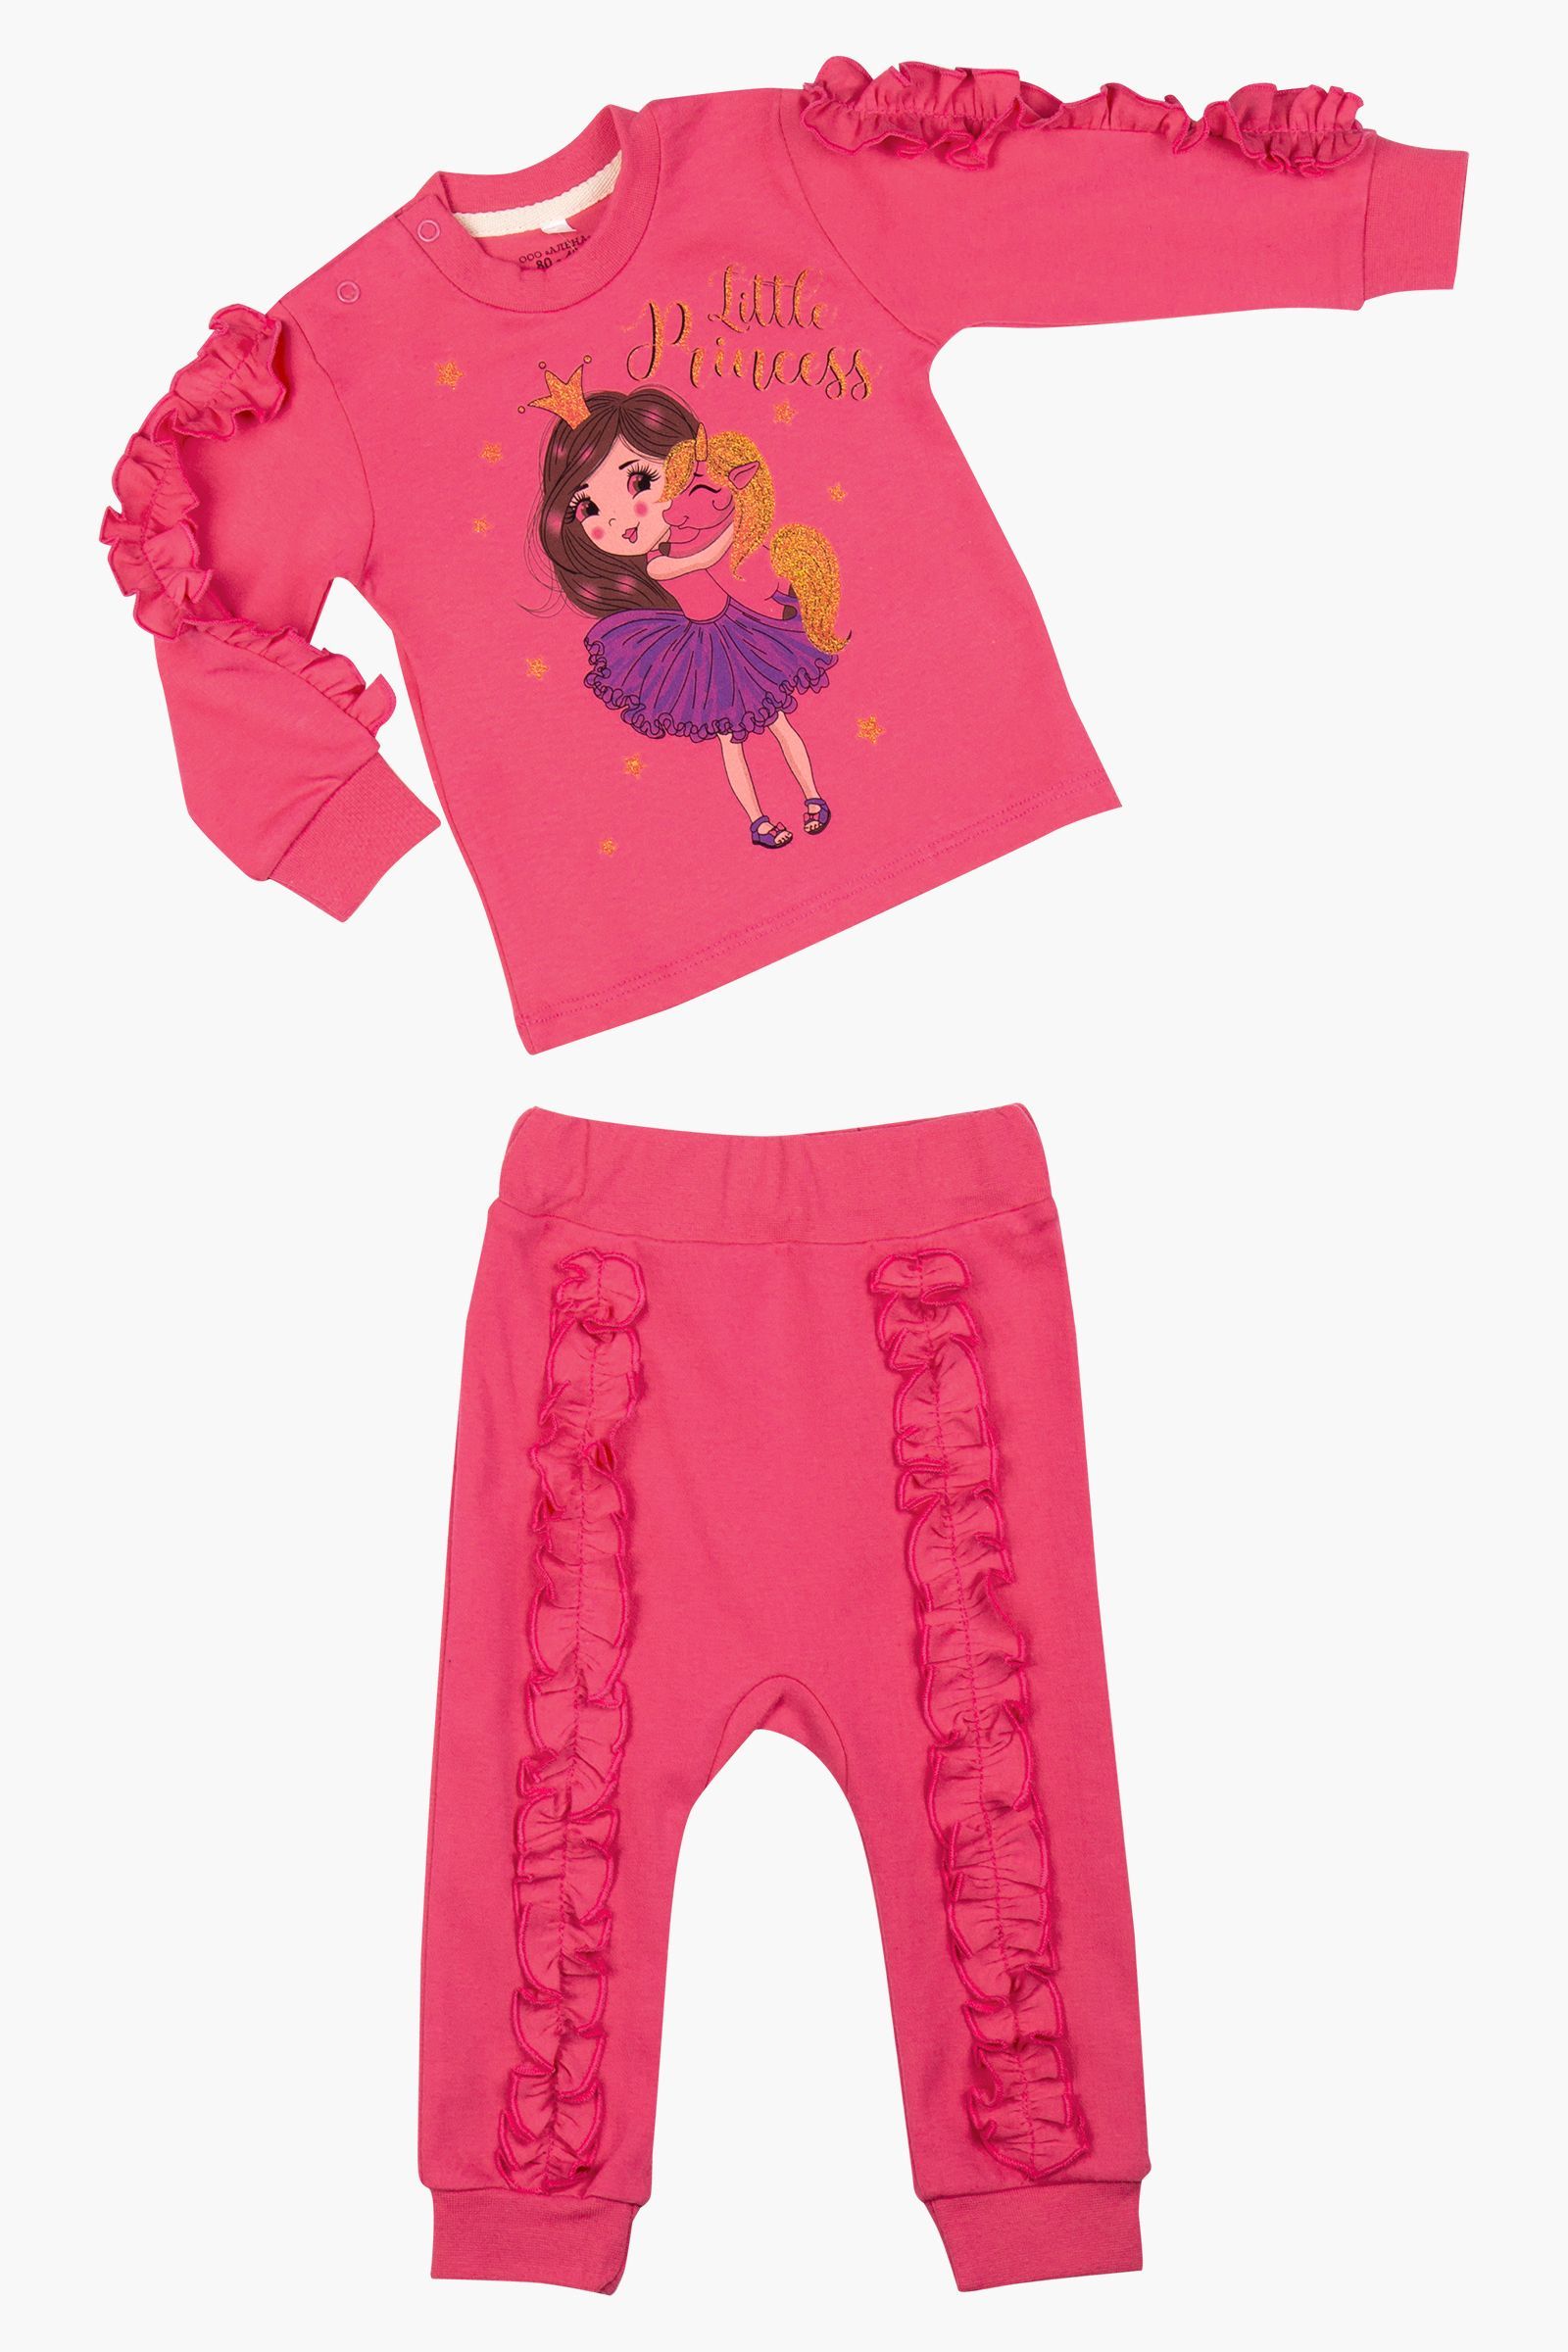 Комплект для девочки АЛЕНА 4292-2 кофточка штанишки  Текстиль Центр 